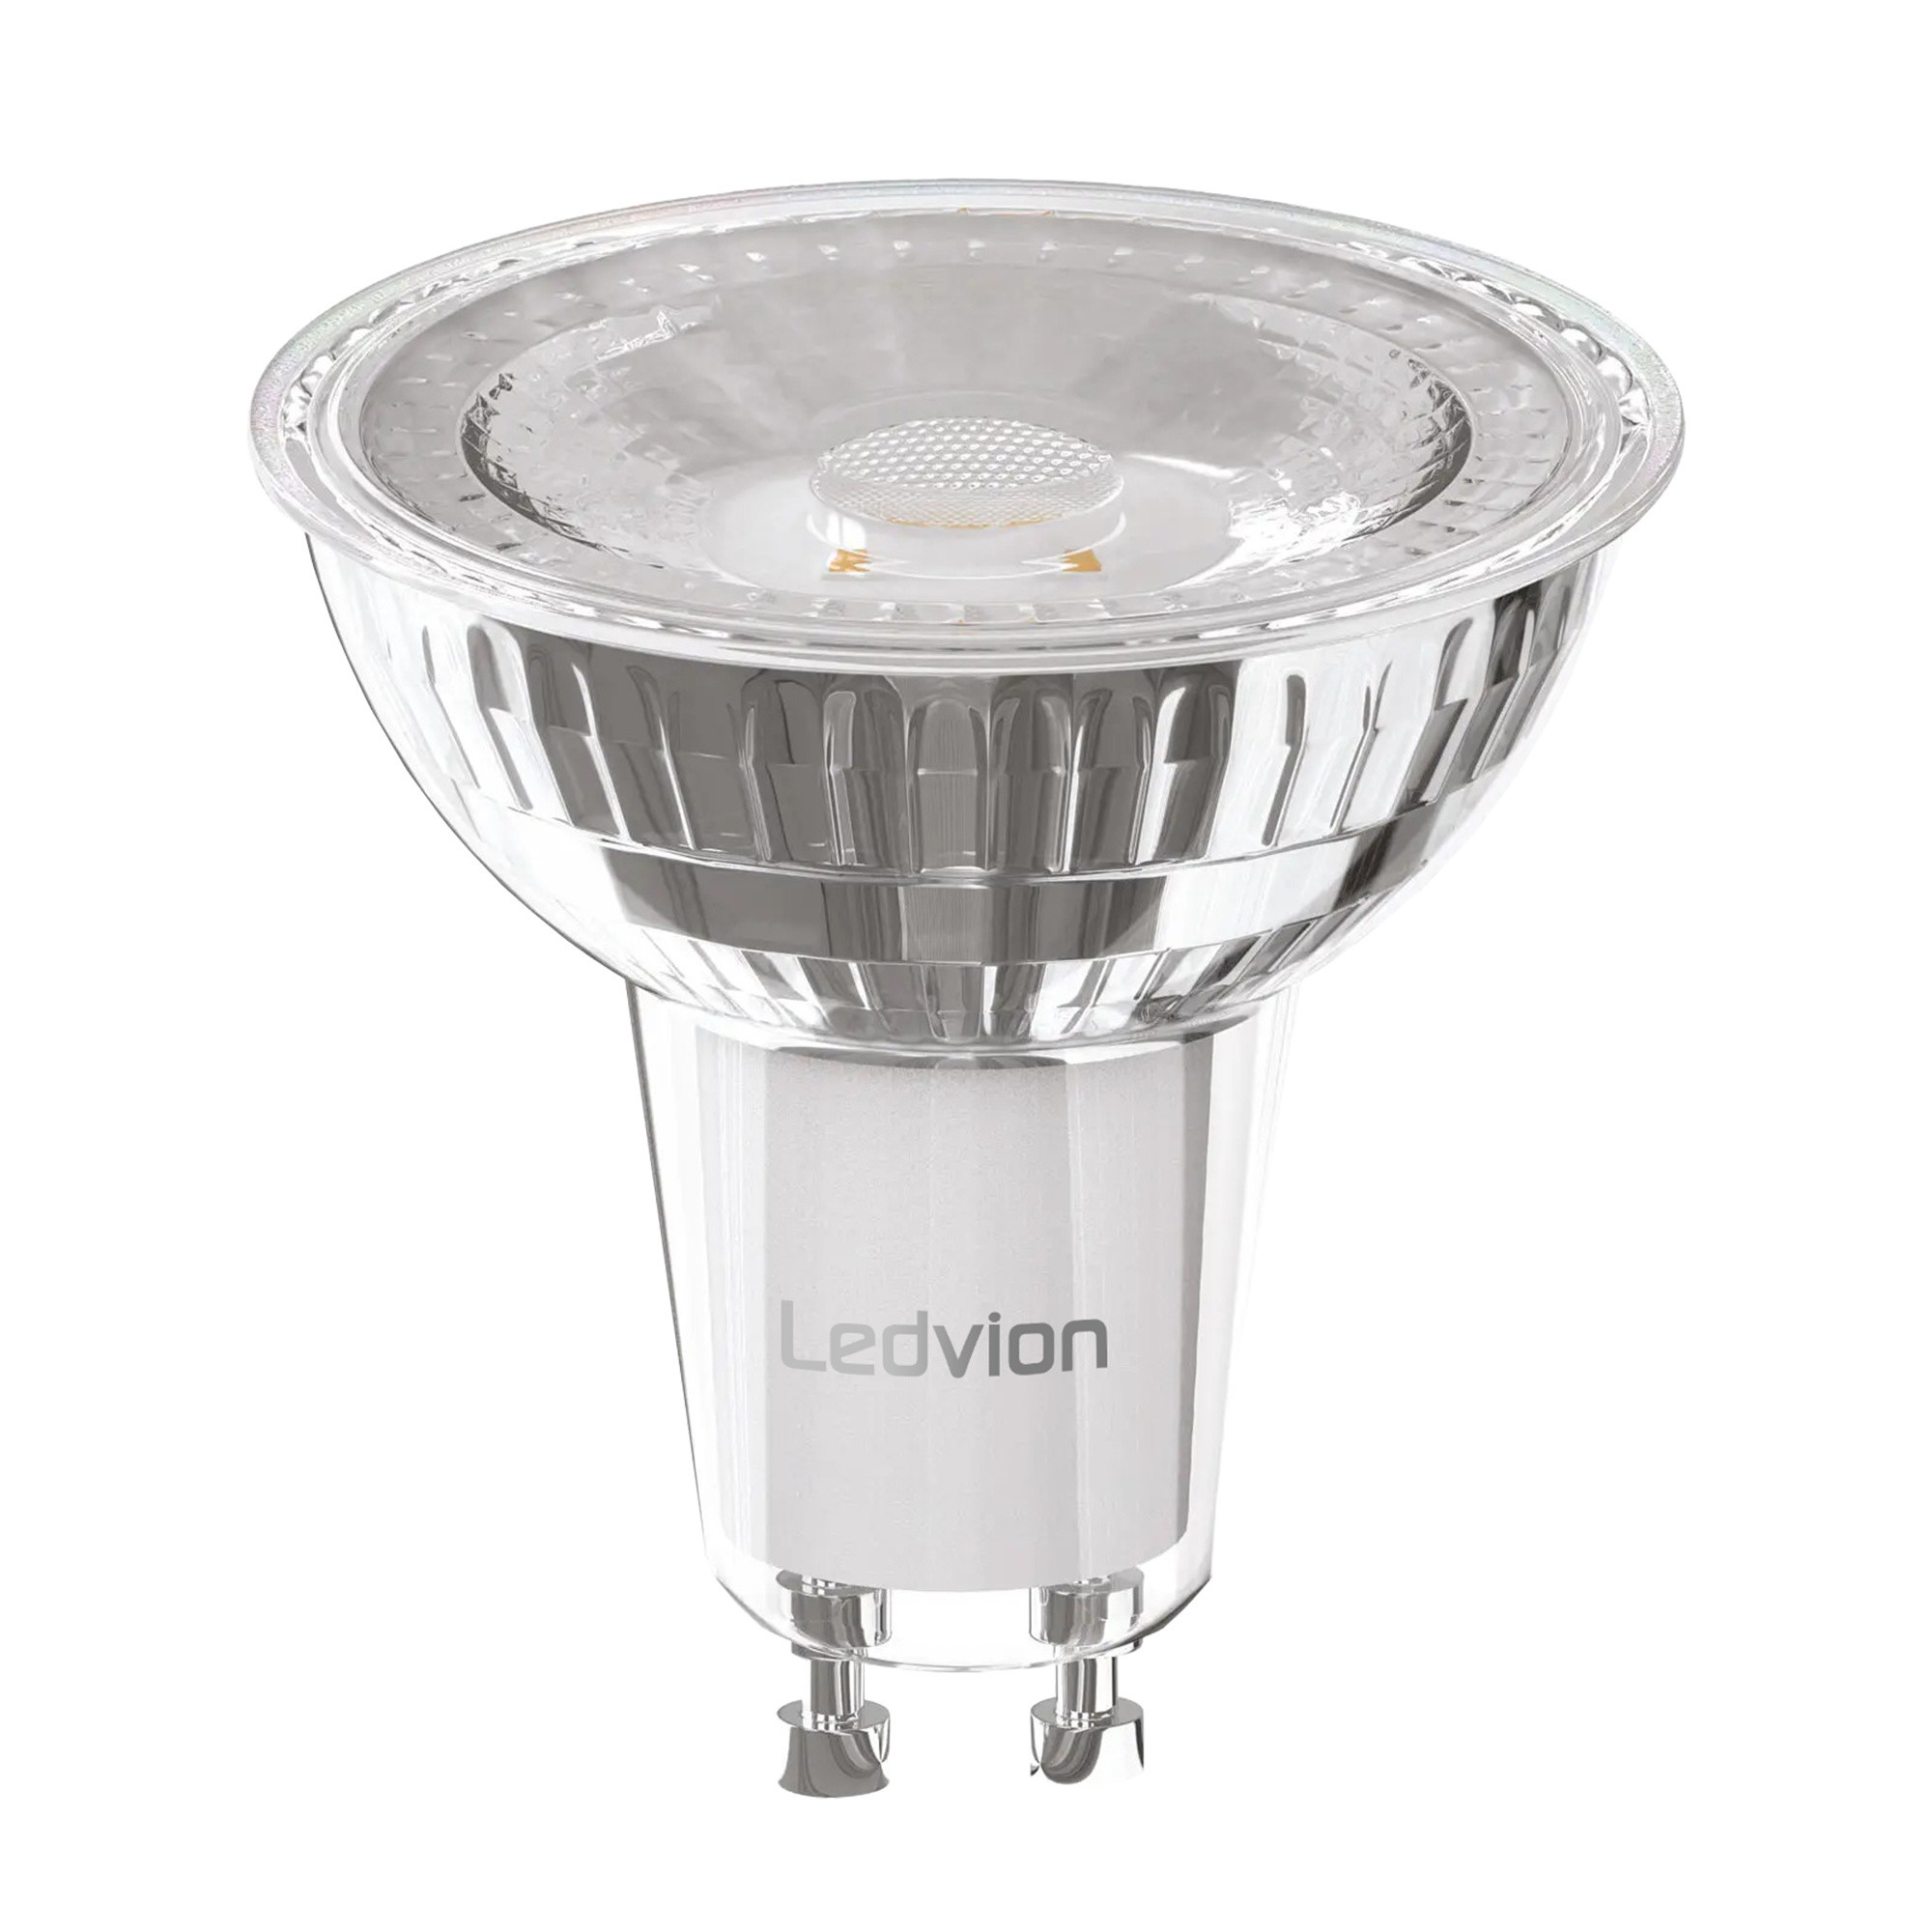 Ledvion GU10 LED Strahler Dimmbar - 5W - 2700K - Beleuchtungonline.de